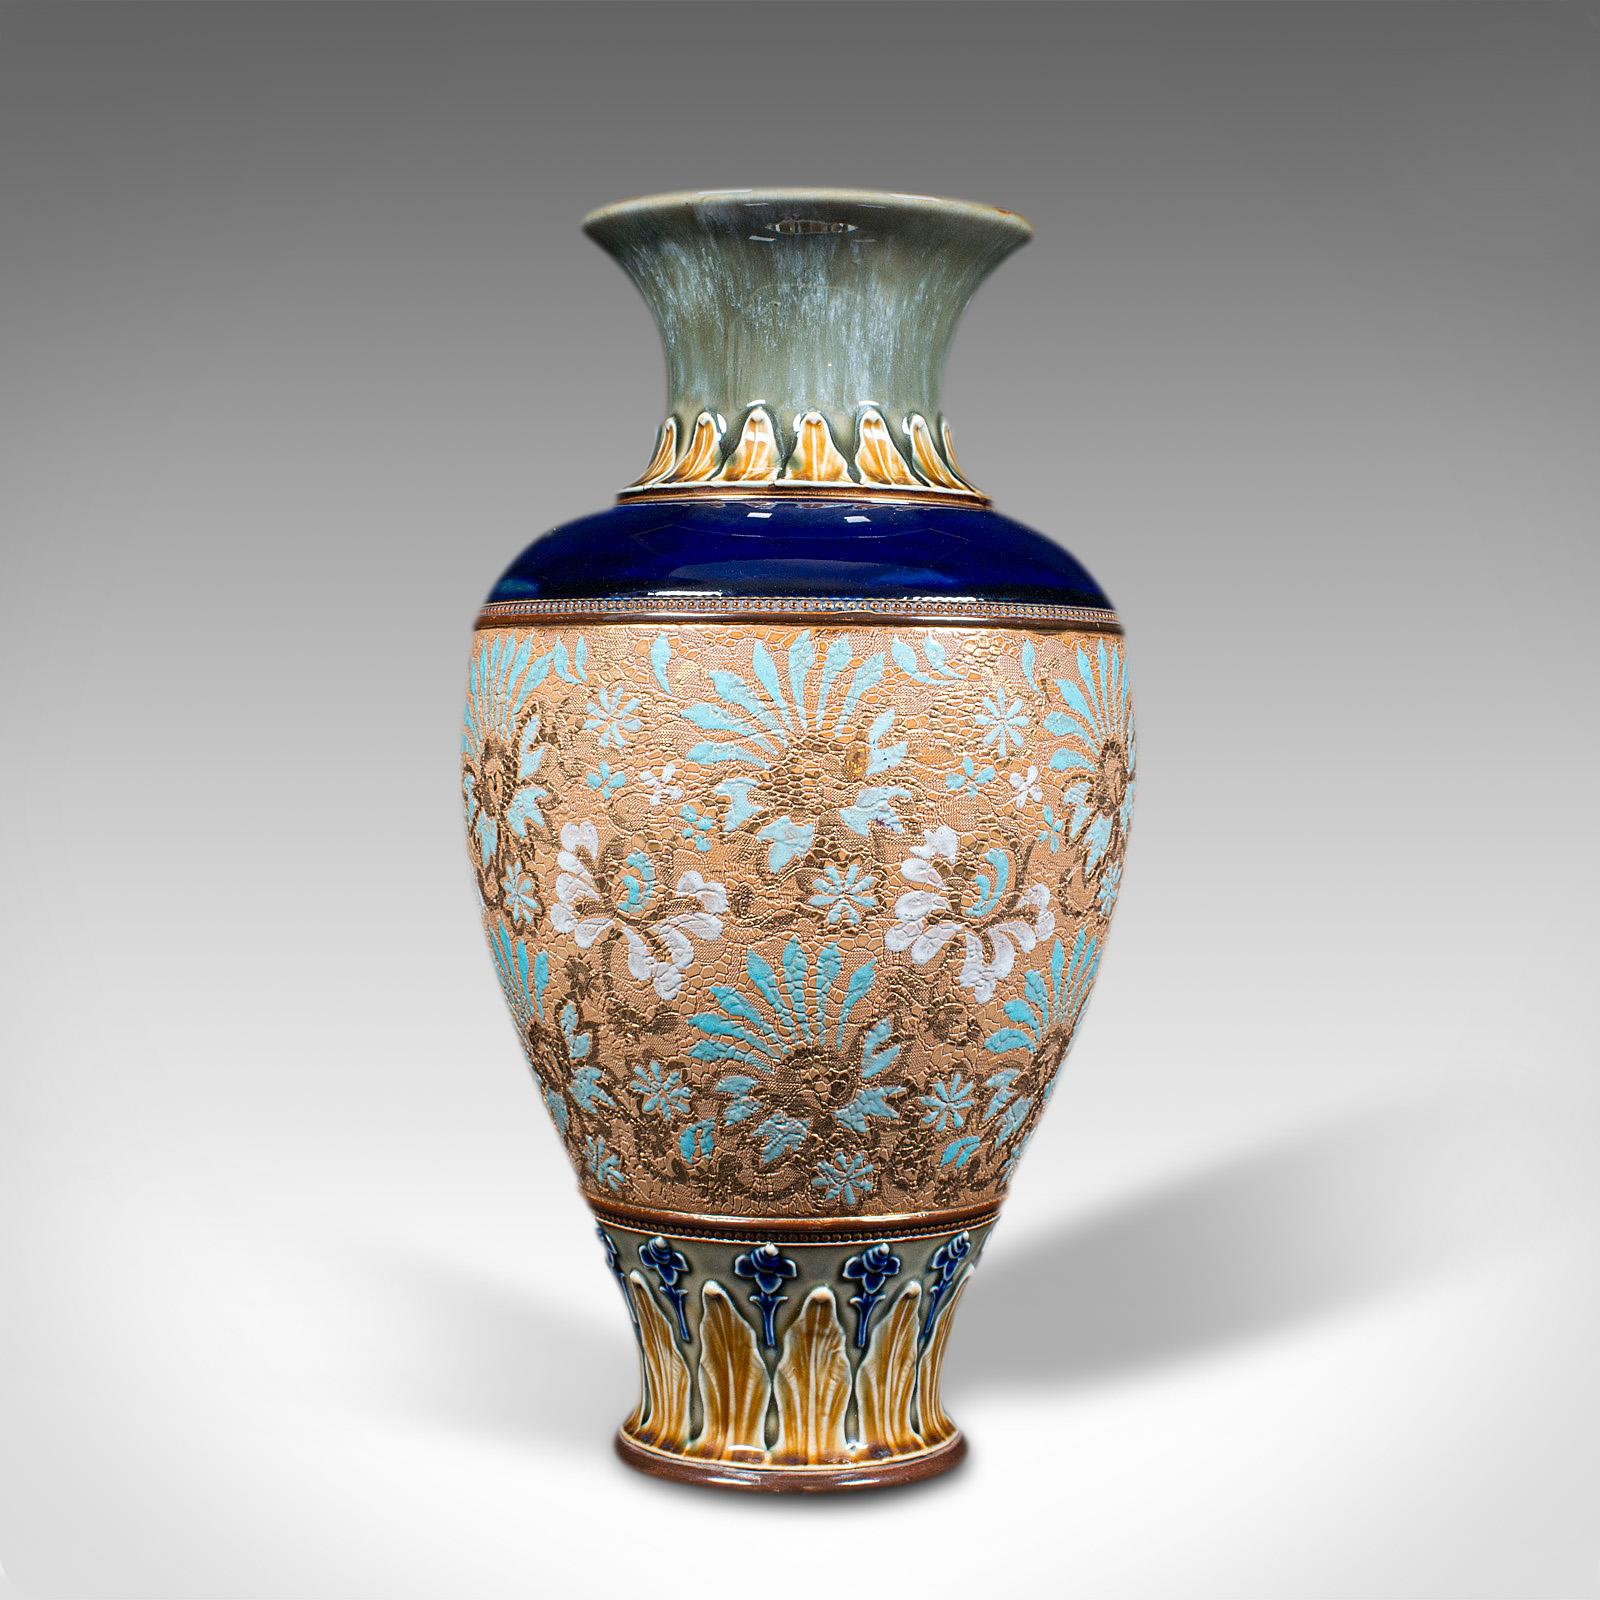 British Antique Decorative Vase, English, Ceramic, Display, Art Nouveau, Edwardian, 1910